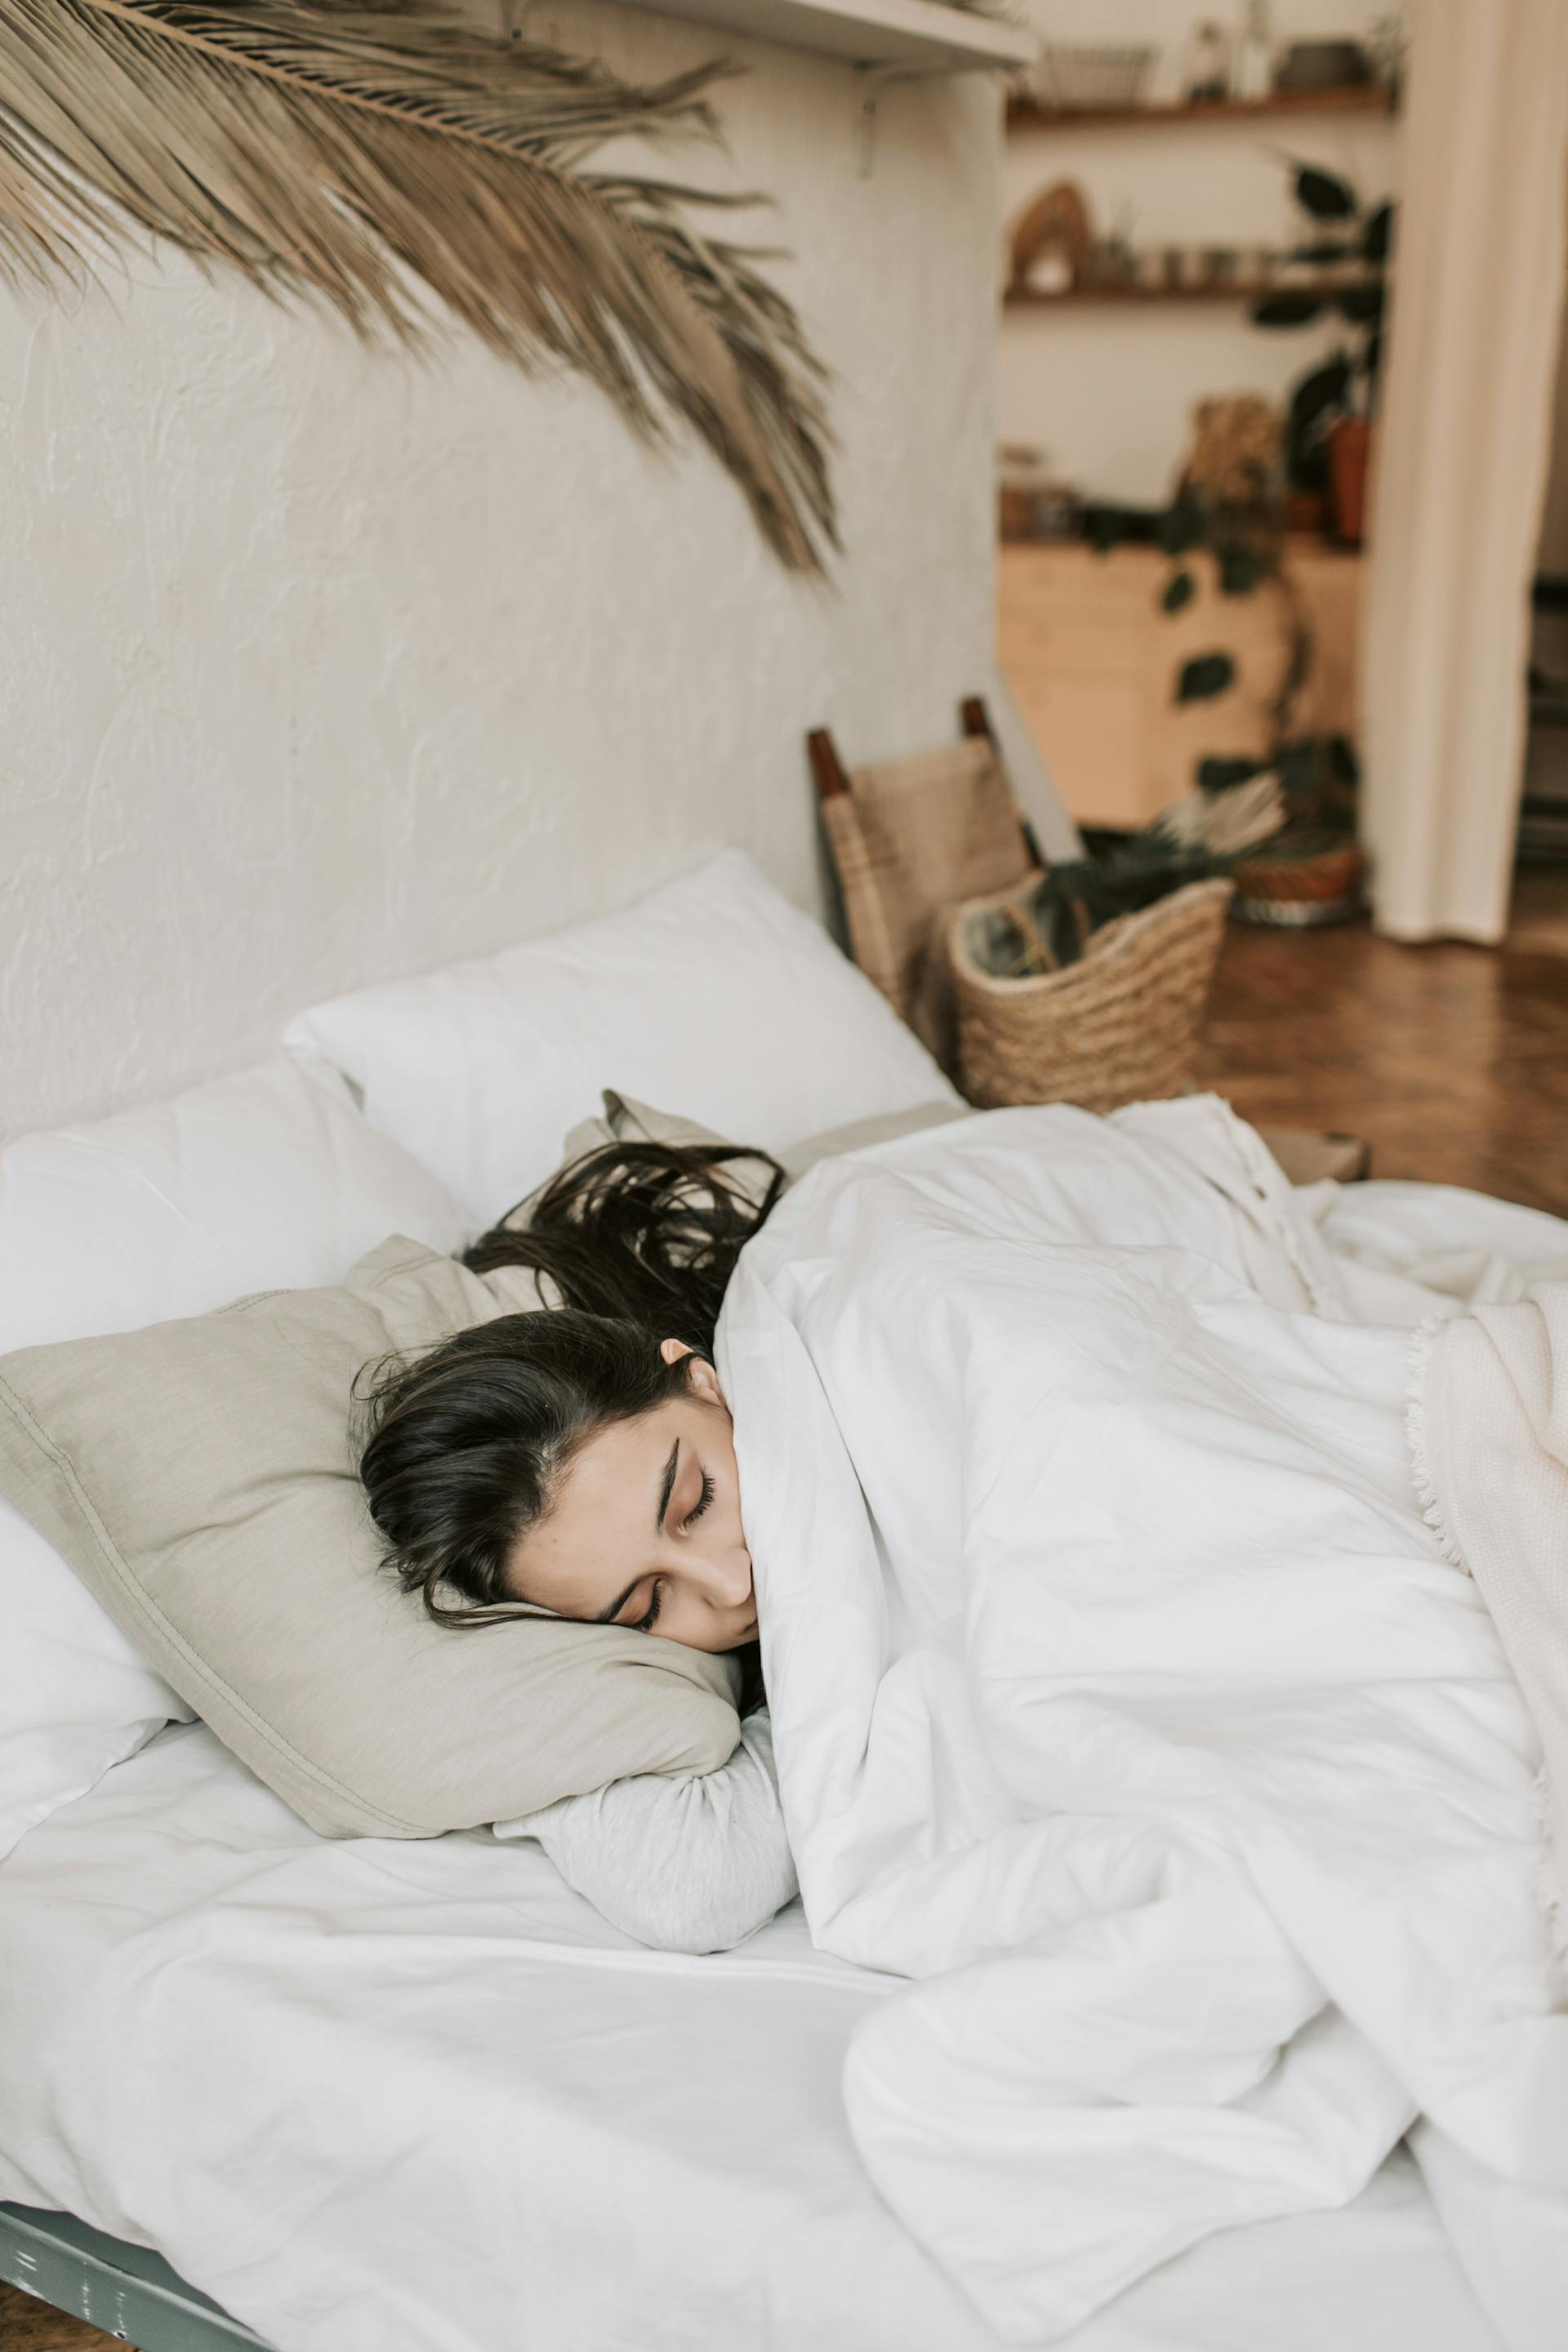 A woman sleeping in bed | Source: Pexels